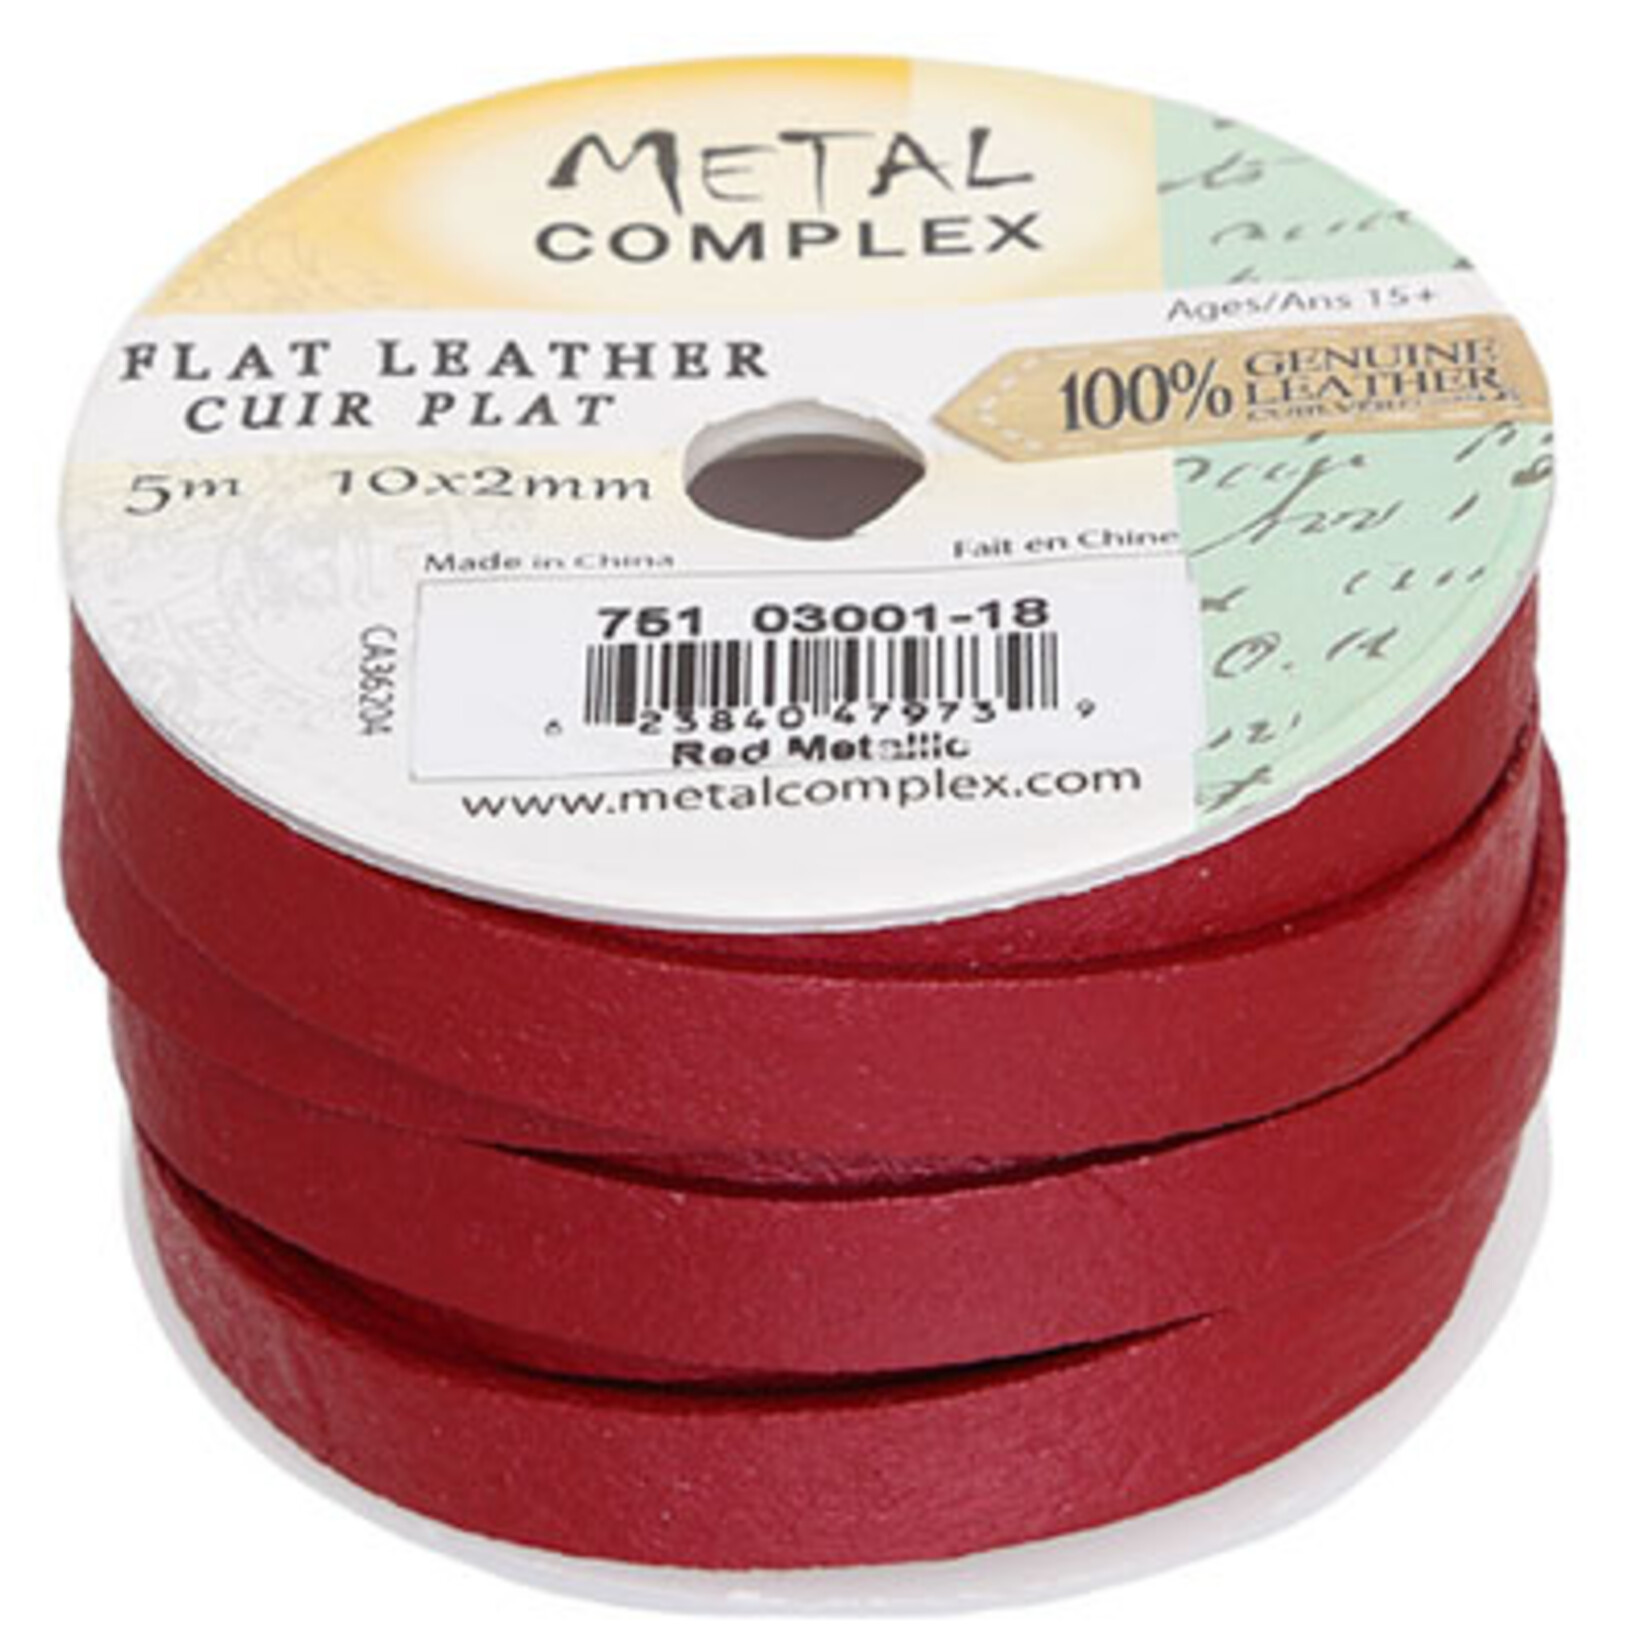 Flat Leather 10x2mm (5m spool)